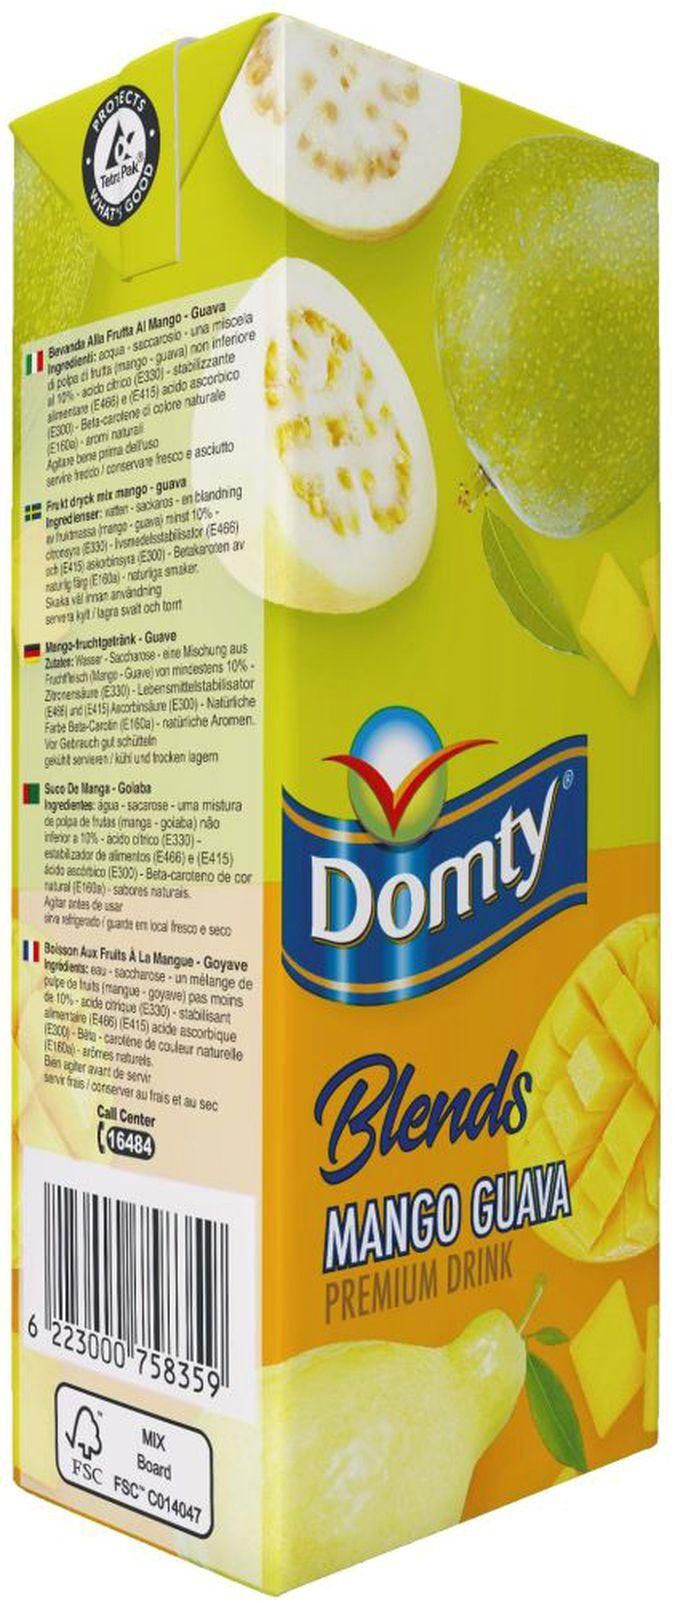 Domty Blends Mango Guava Premium Drink - 235ml